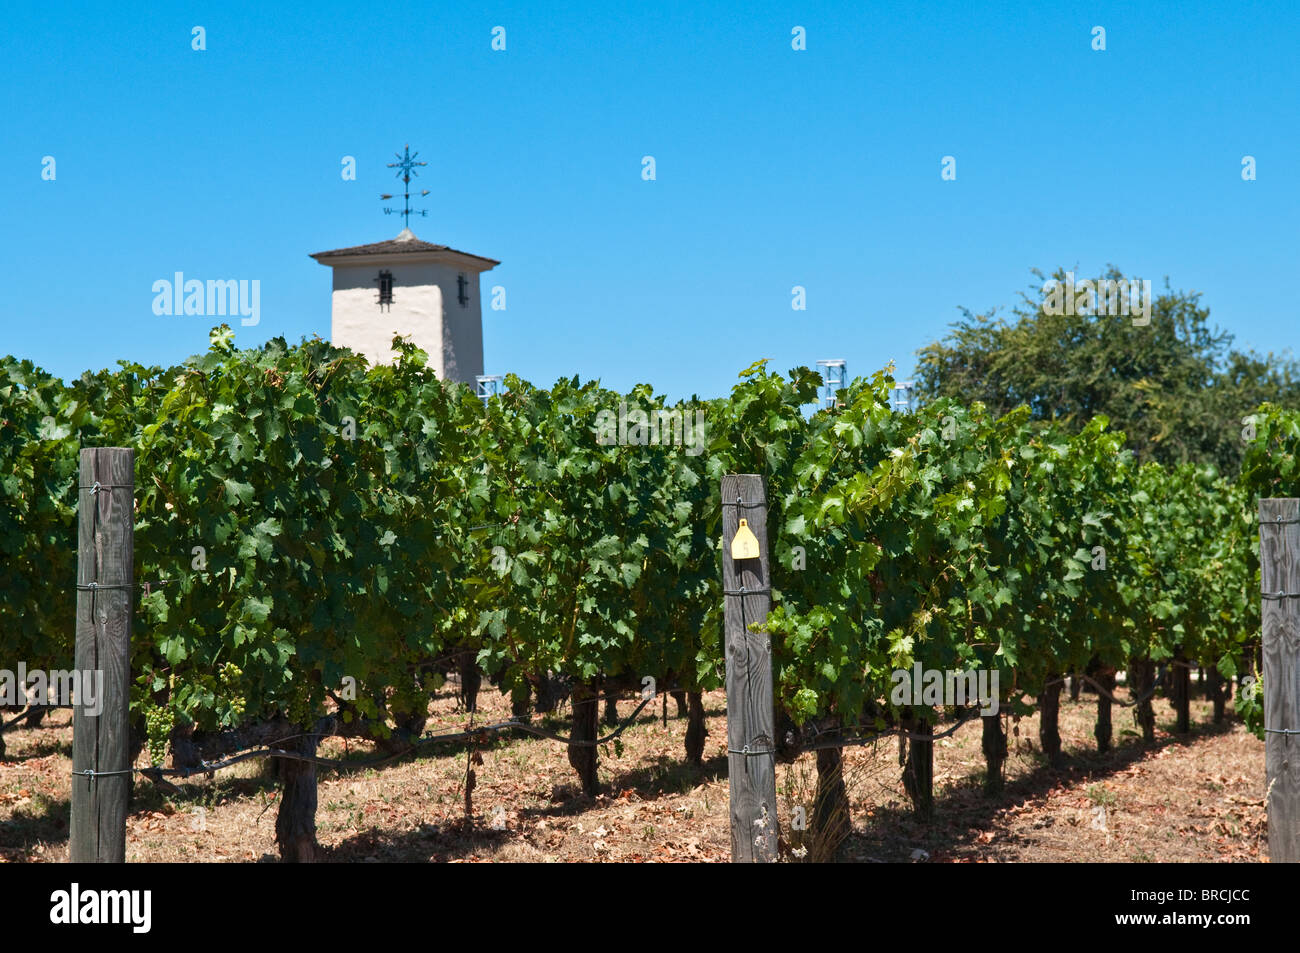 View of the vineyards of the Robert Mondavi Winery, Napa Valley, California, USA Stock Photo